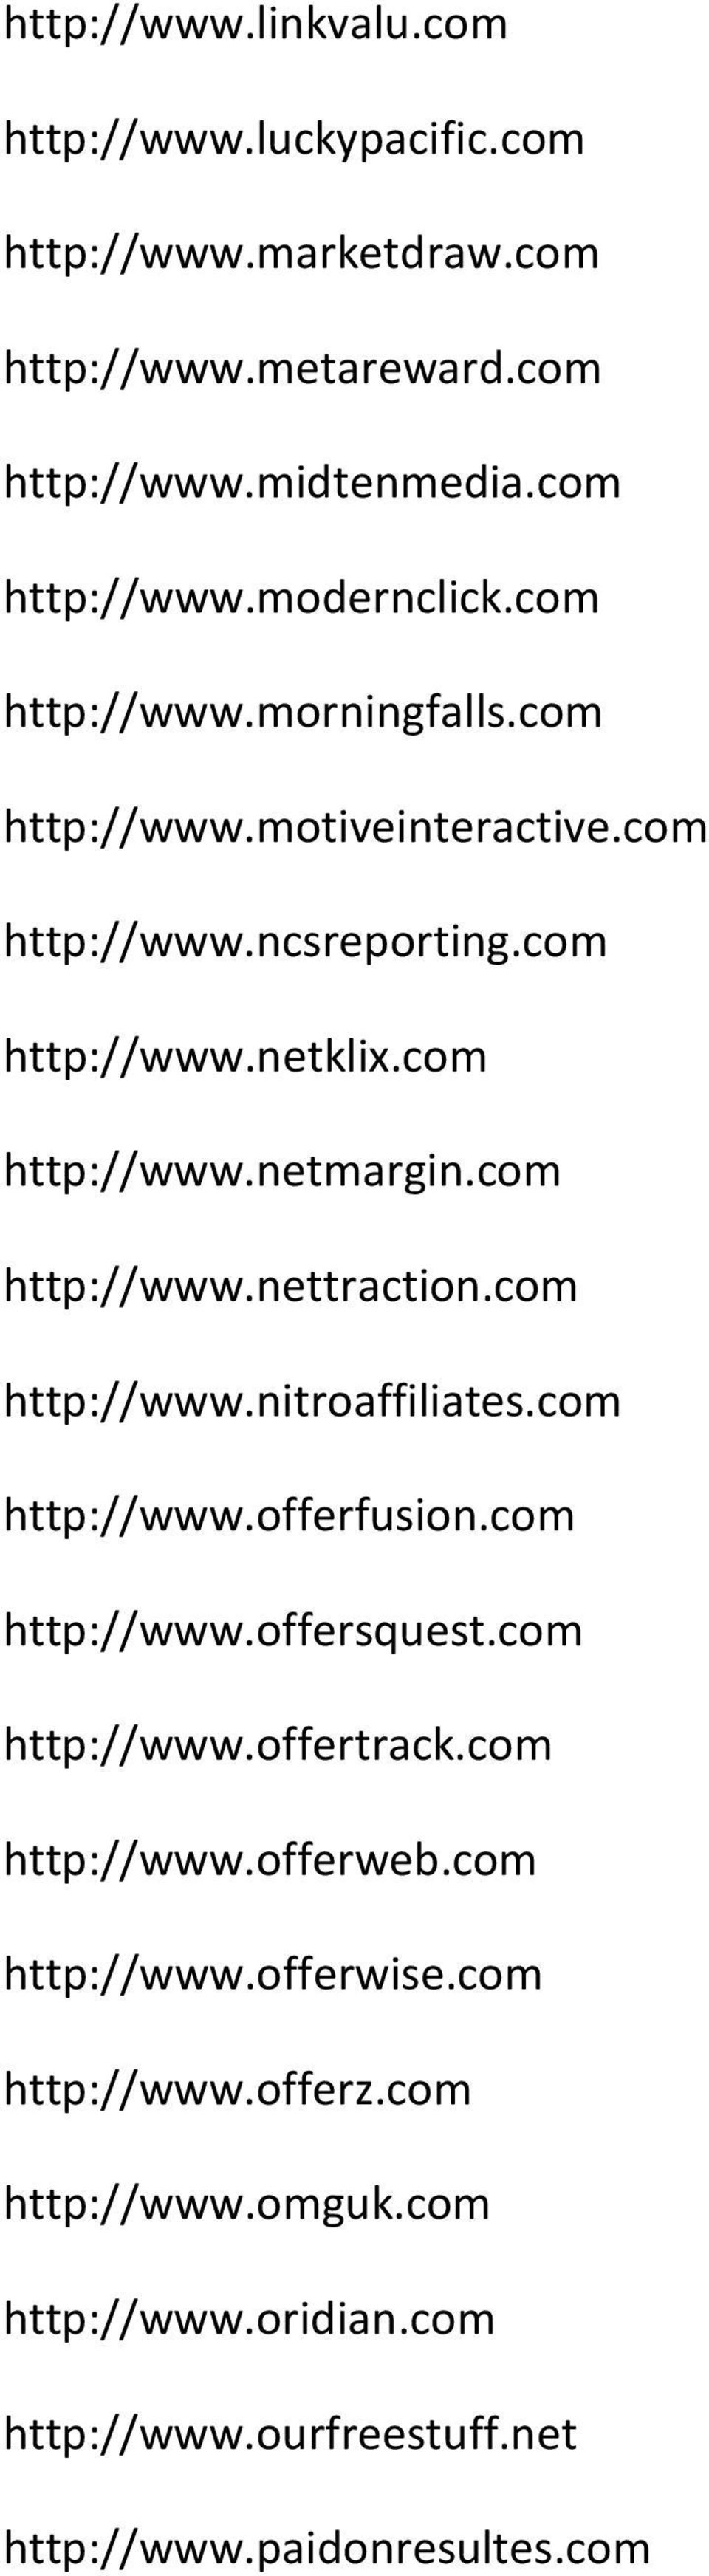 com http://www.nitroaffiliates.com http://www.offerfusion.com http://www.offersquest.com http://www.offertrack.com http://www.offerweb.com http://www.offerwise.